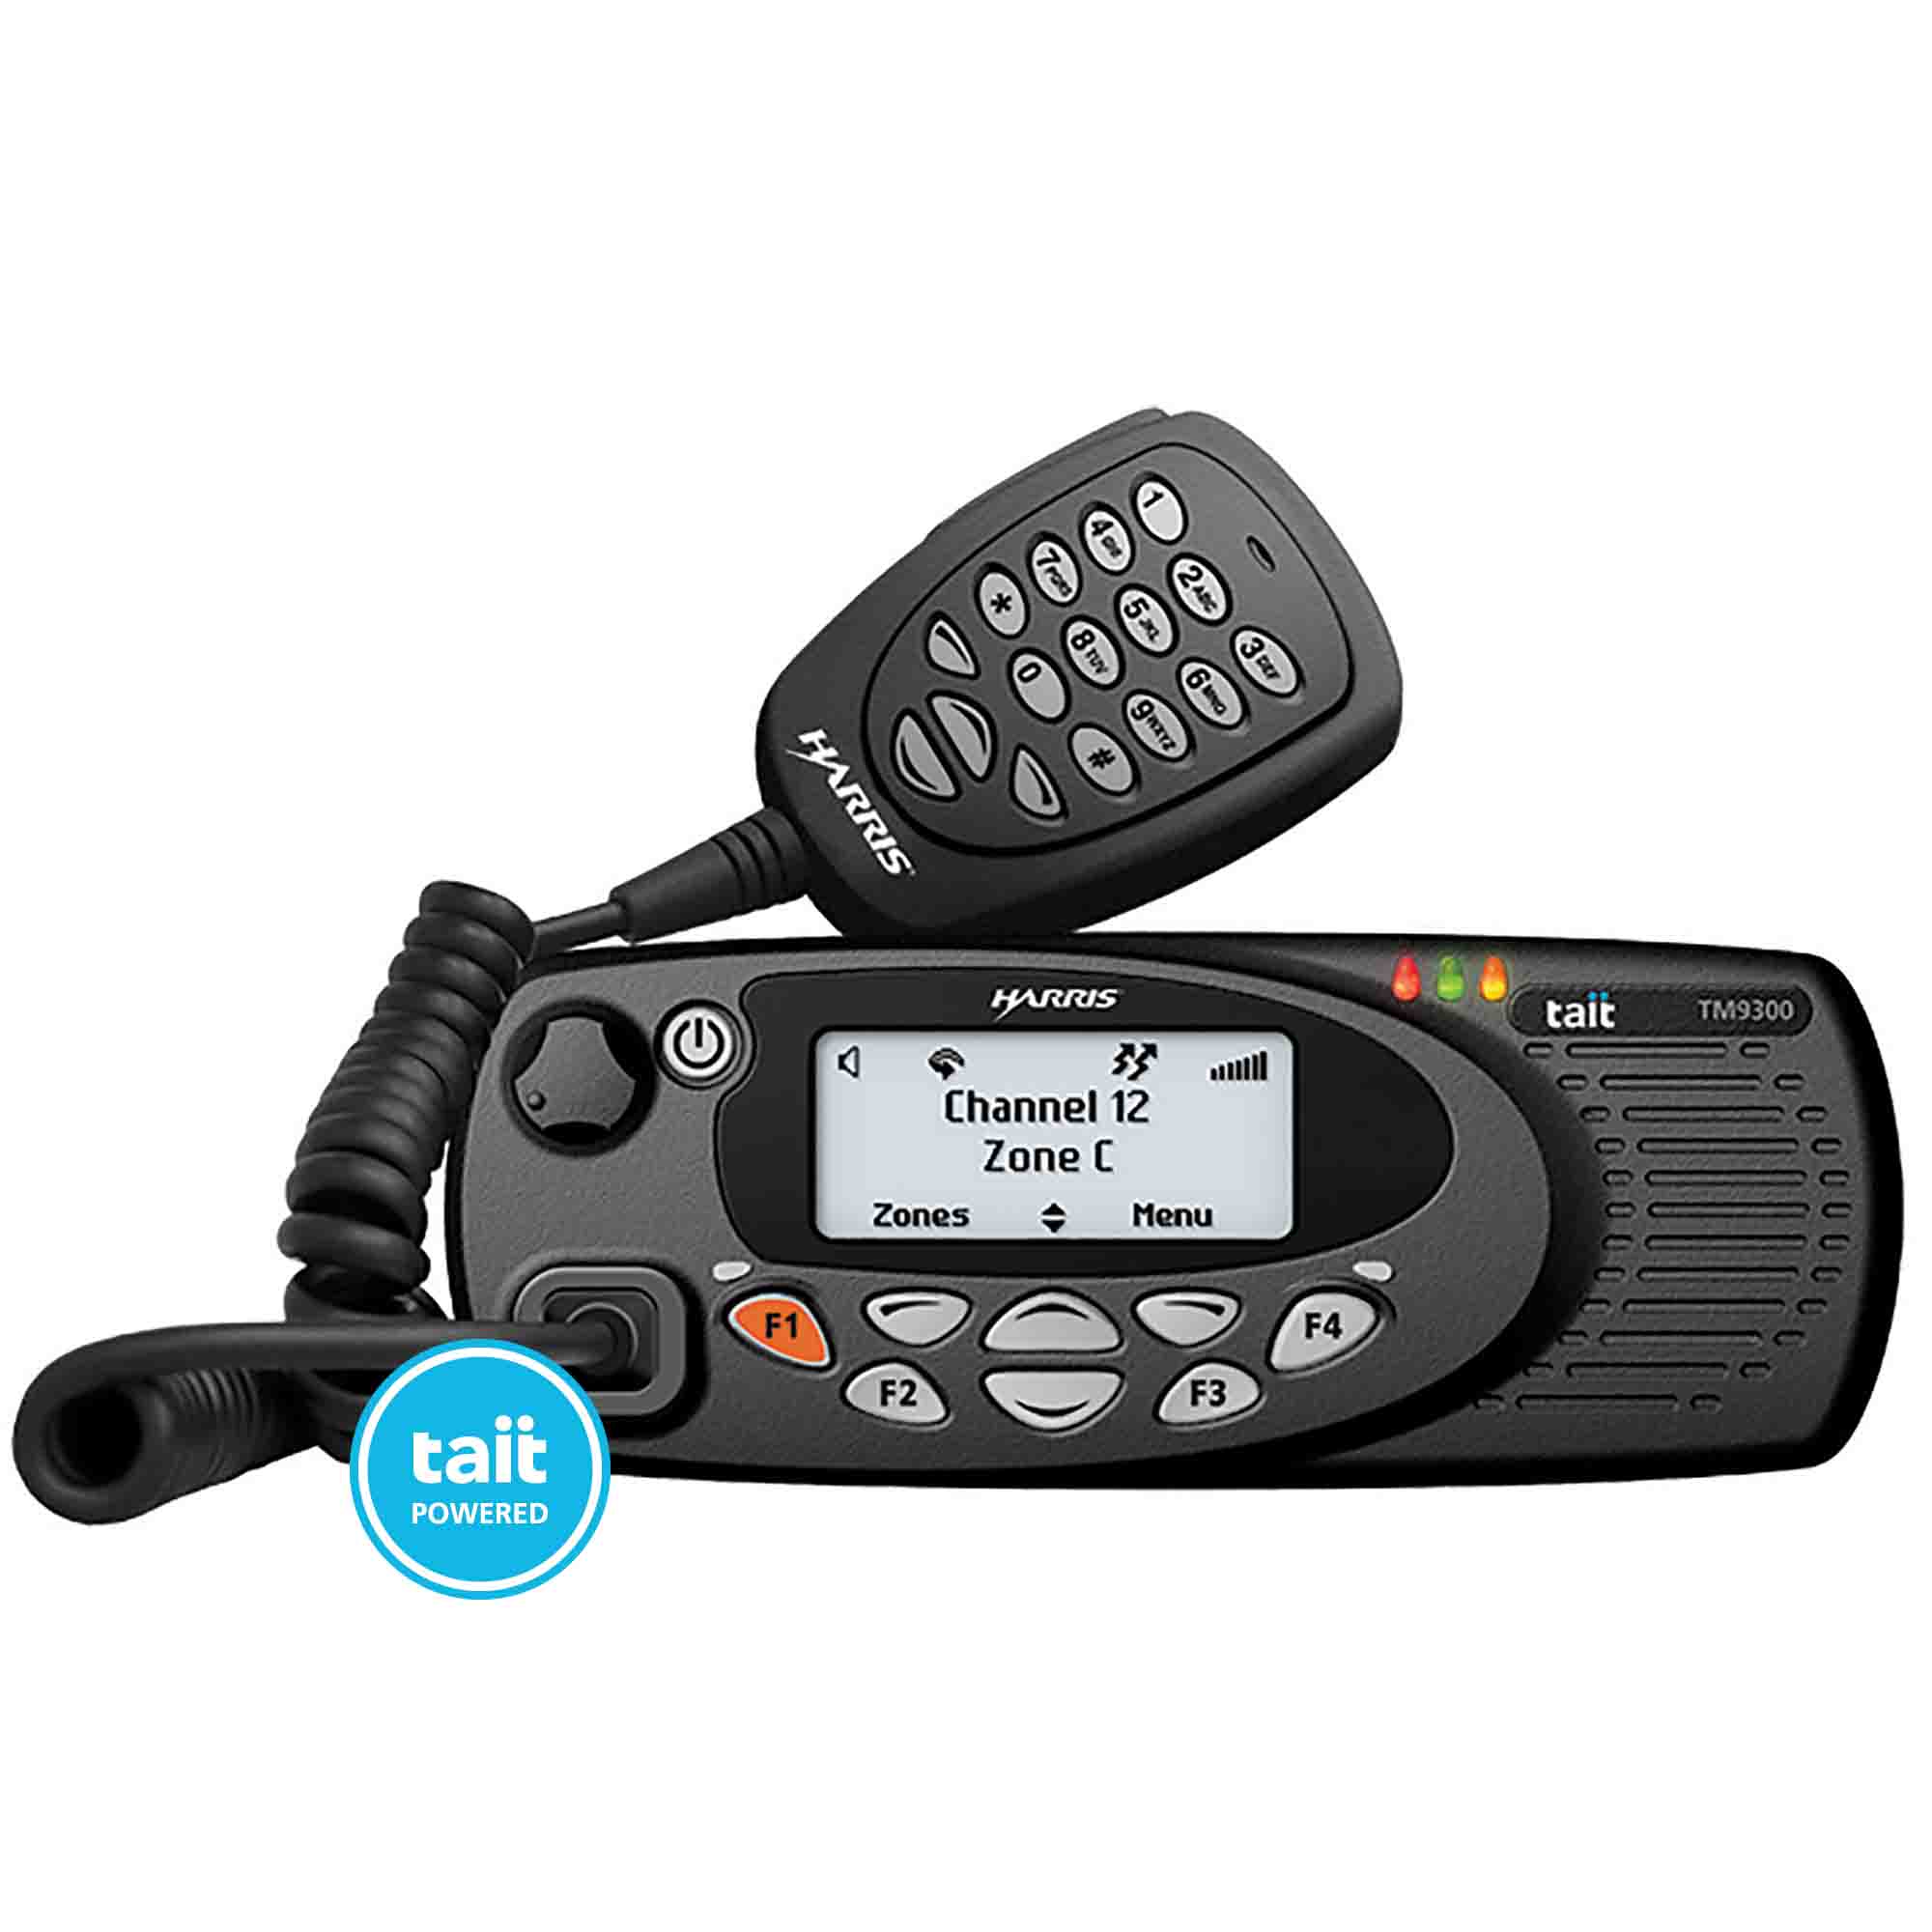 TM9300 DMR Mobile Radio	